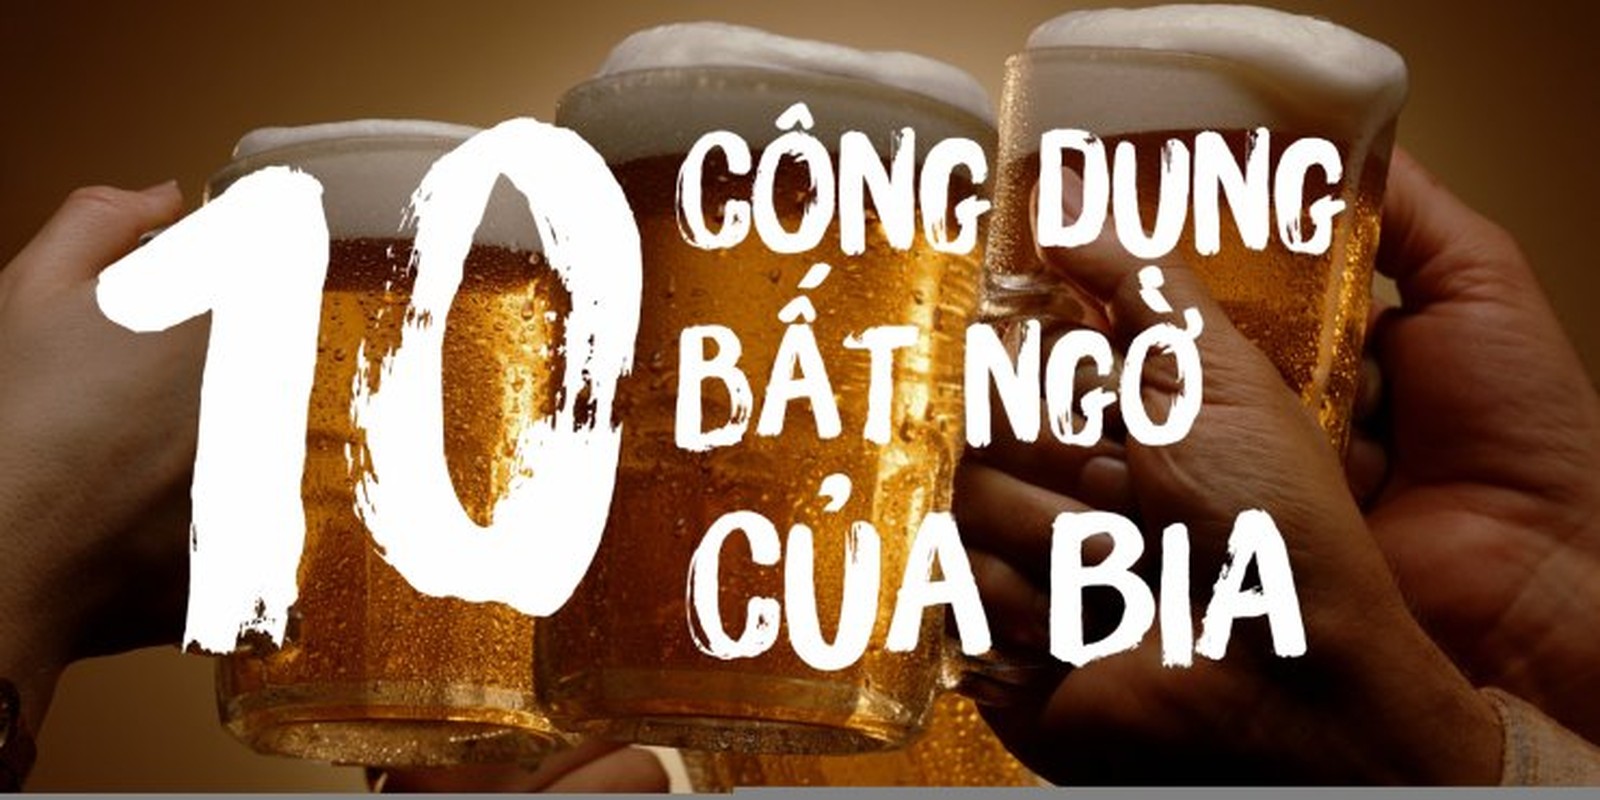 10 cong dung bat ngo cua bia cham soc sac dep, suc khoe